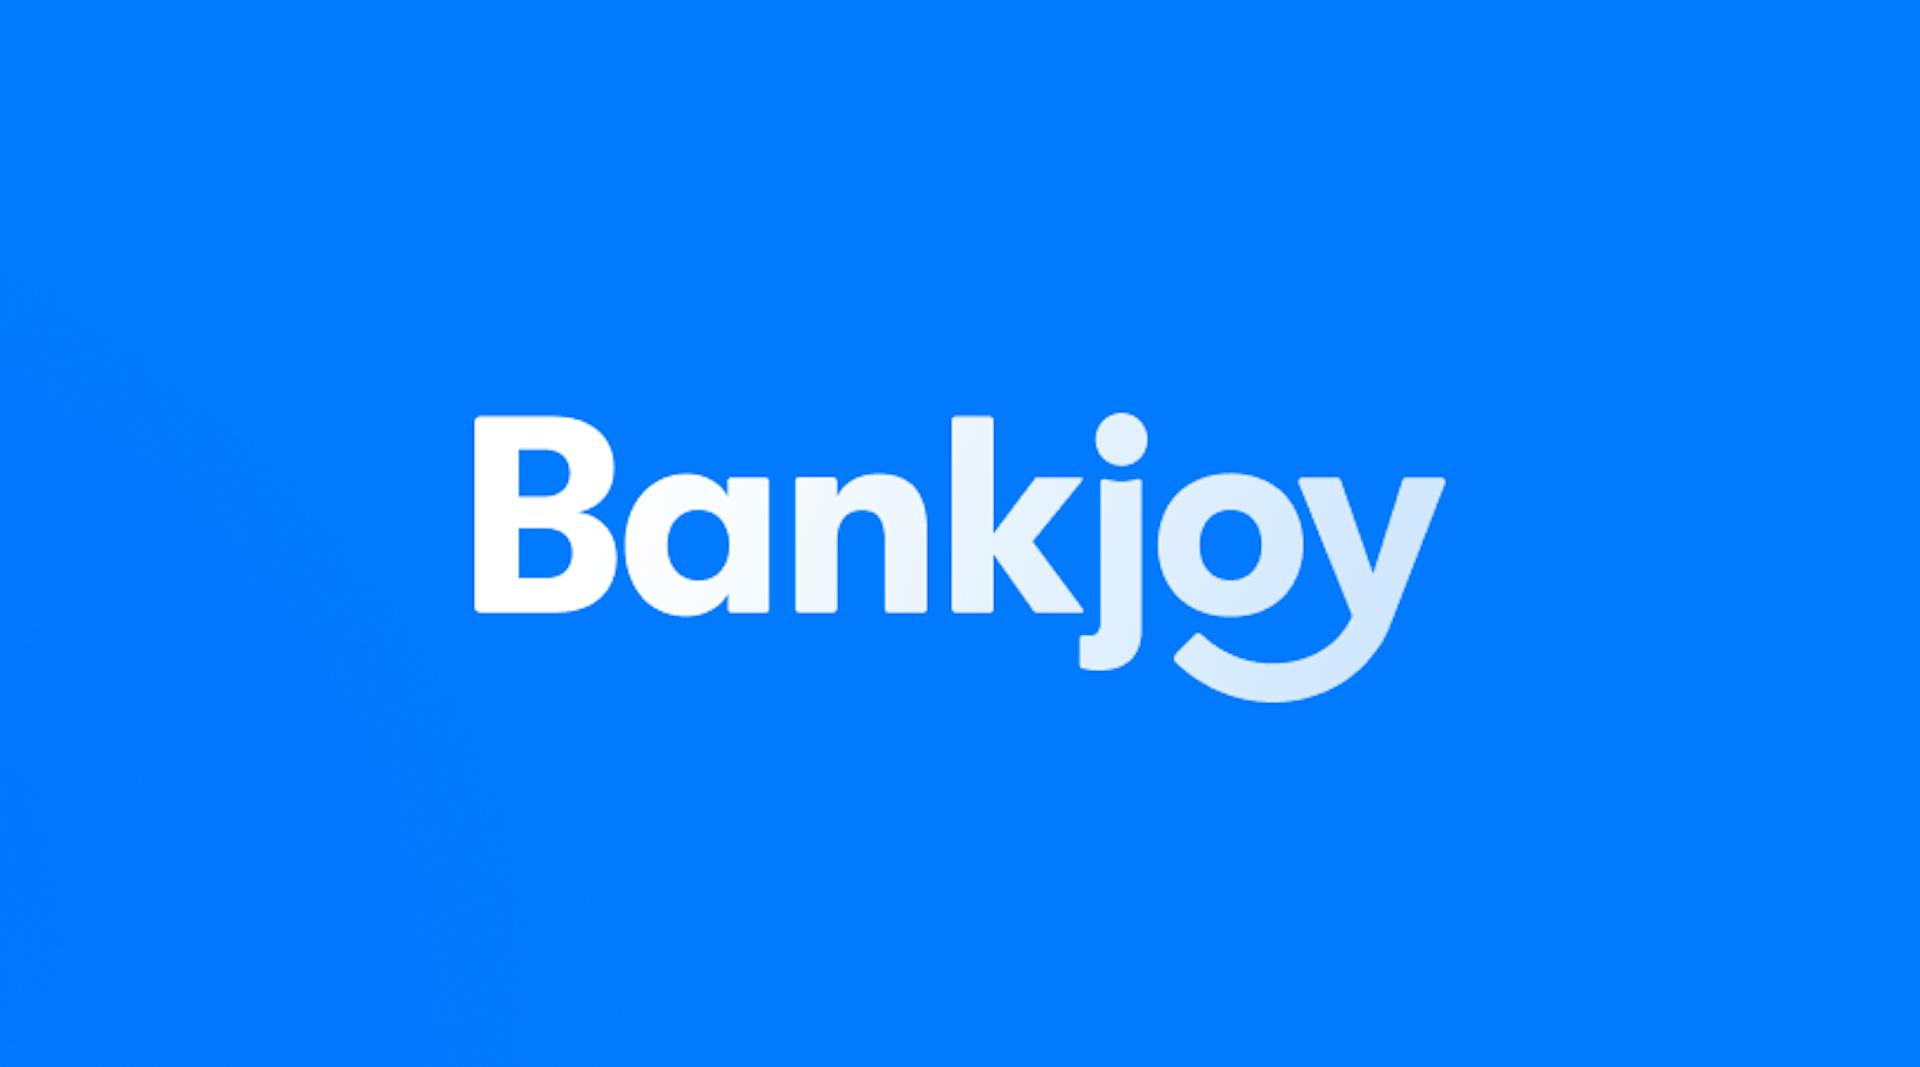 bankjoy raises funding from curql